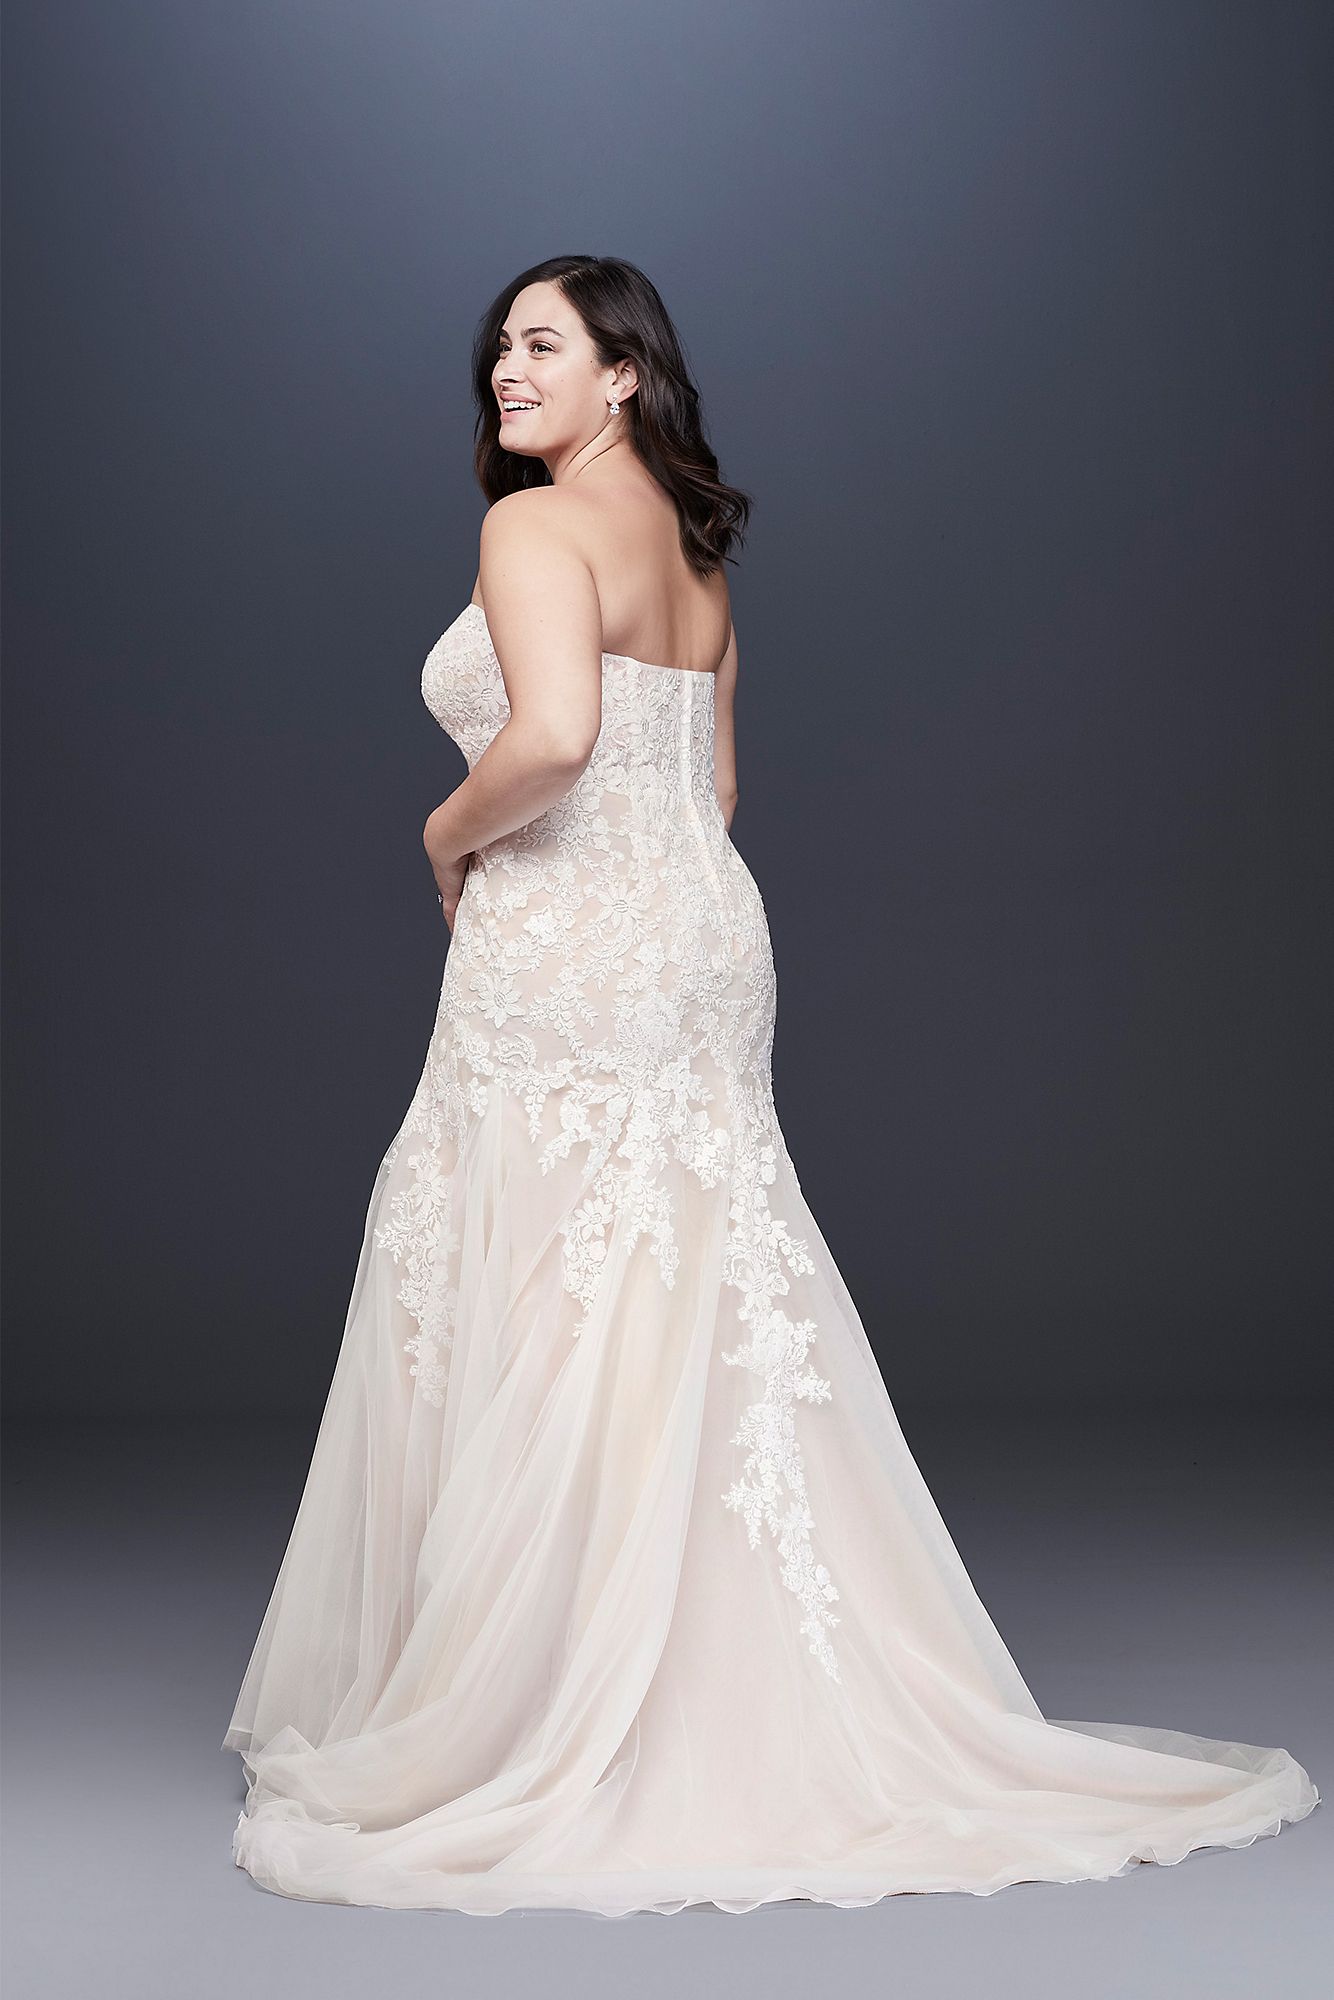 Beaded Floral Lace Mermaid Plus Size Wedding Dress 9WG3964